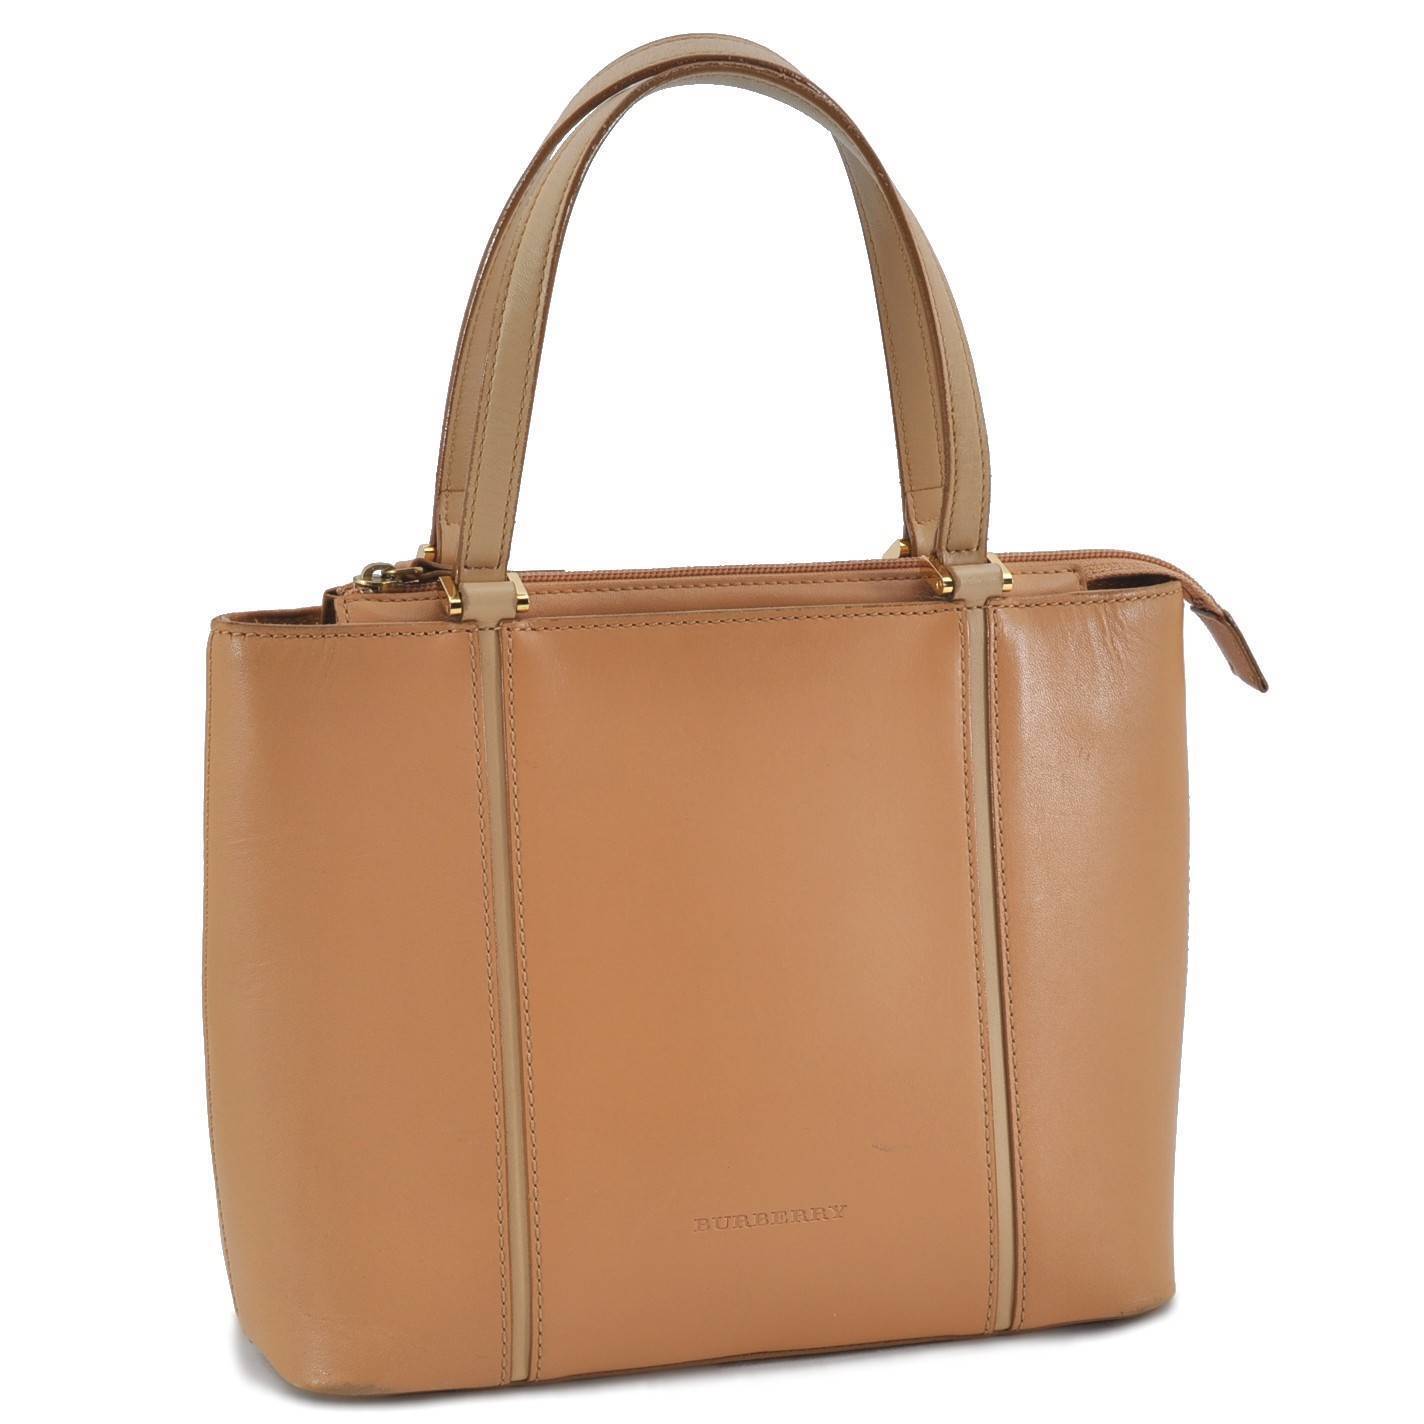 Authentic BURBERRY Vintage Leather Hand Bag Purse Beige H2825